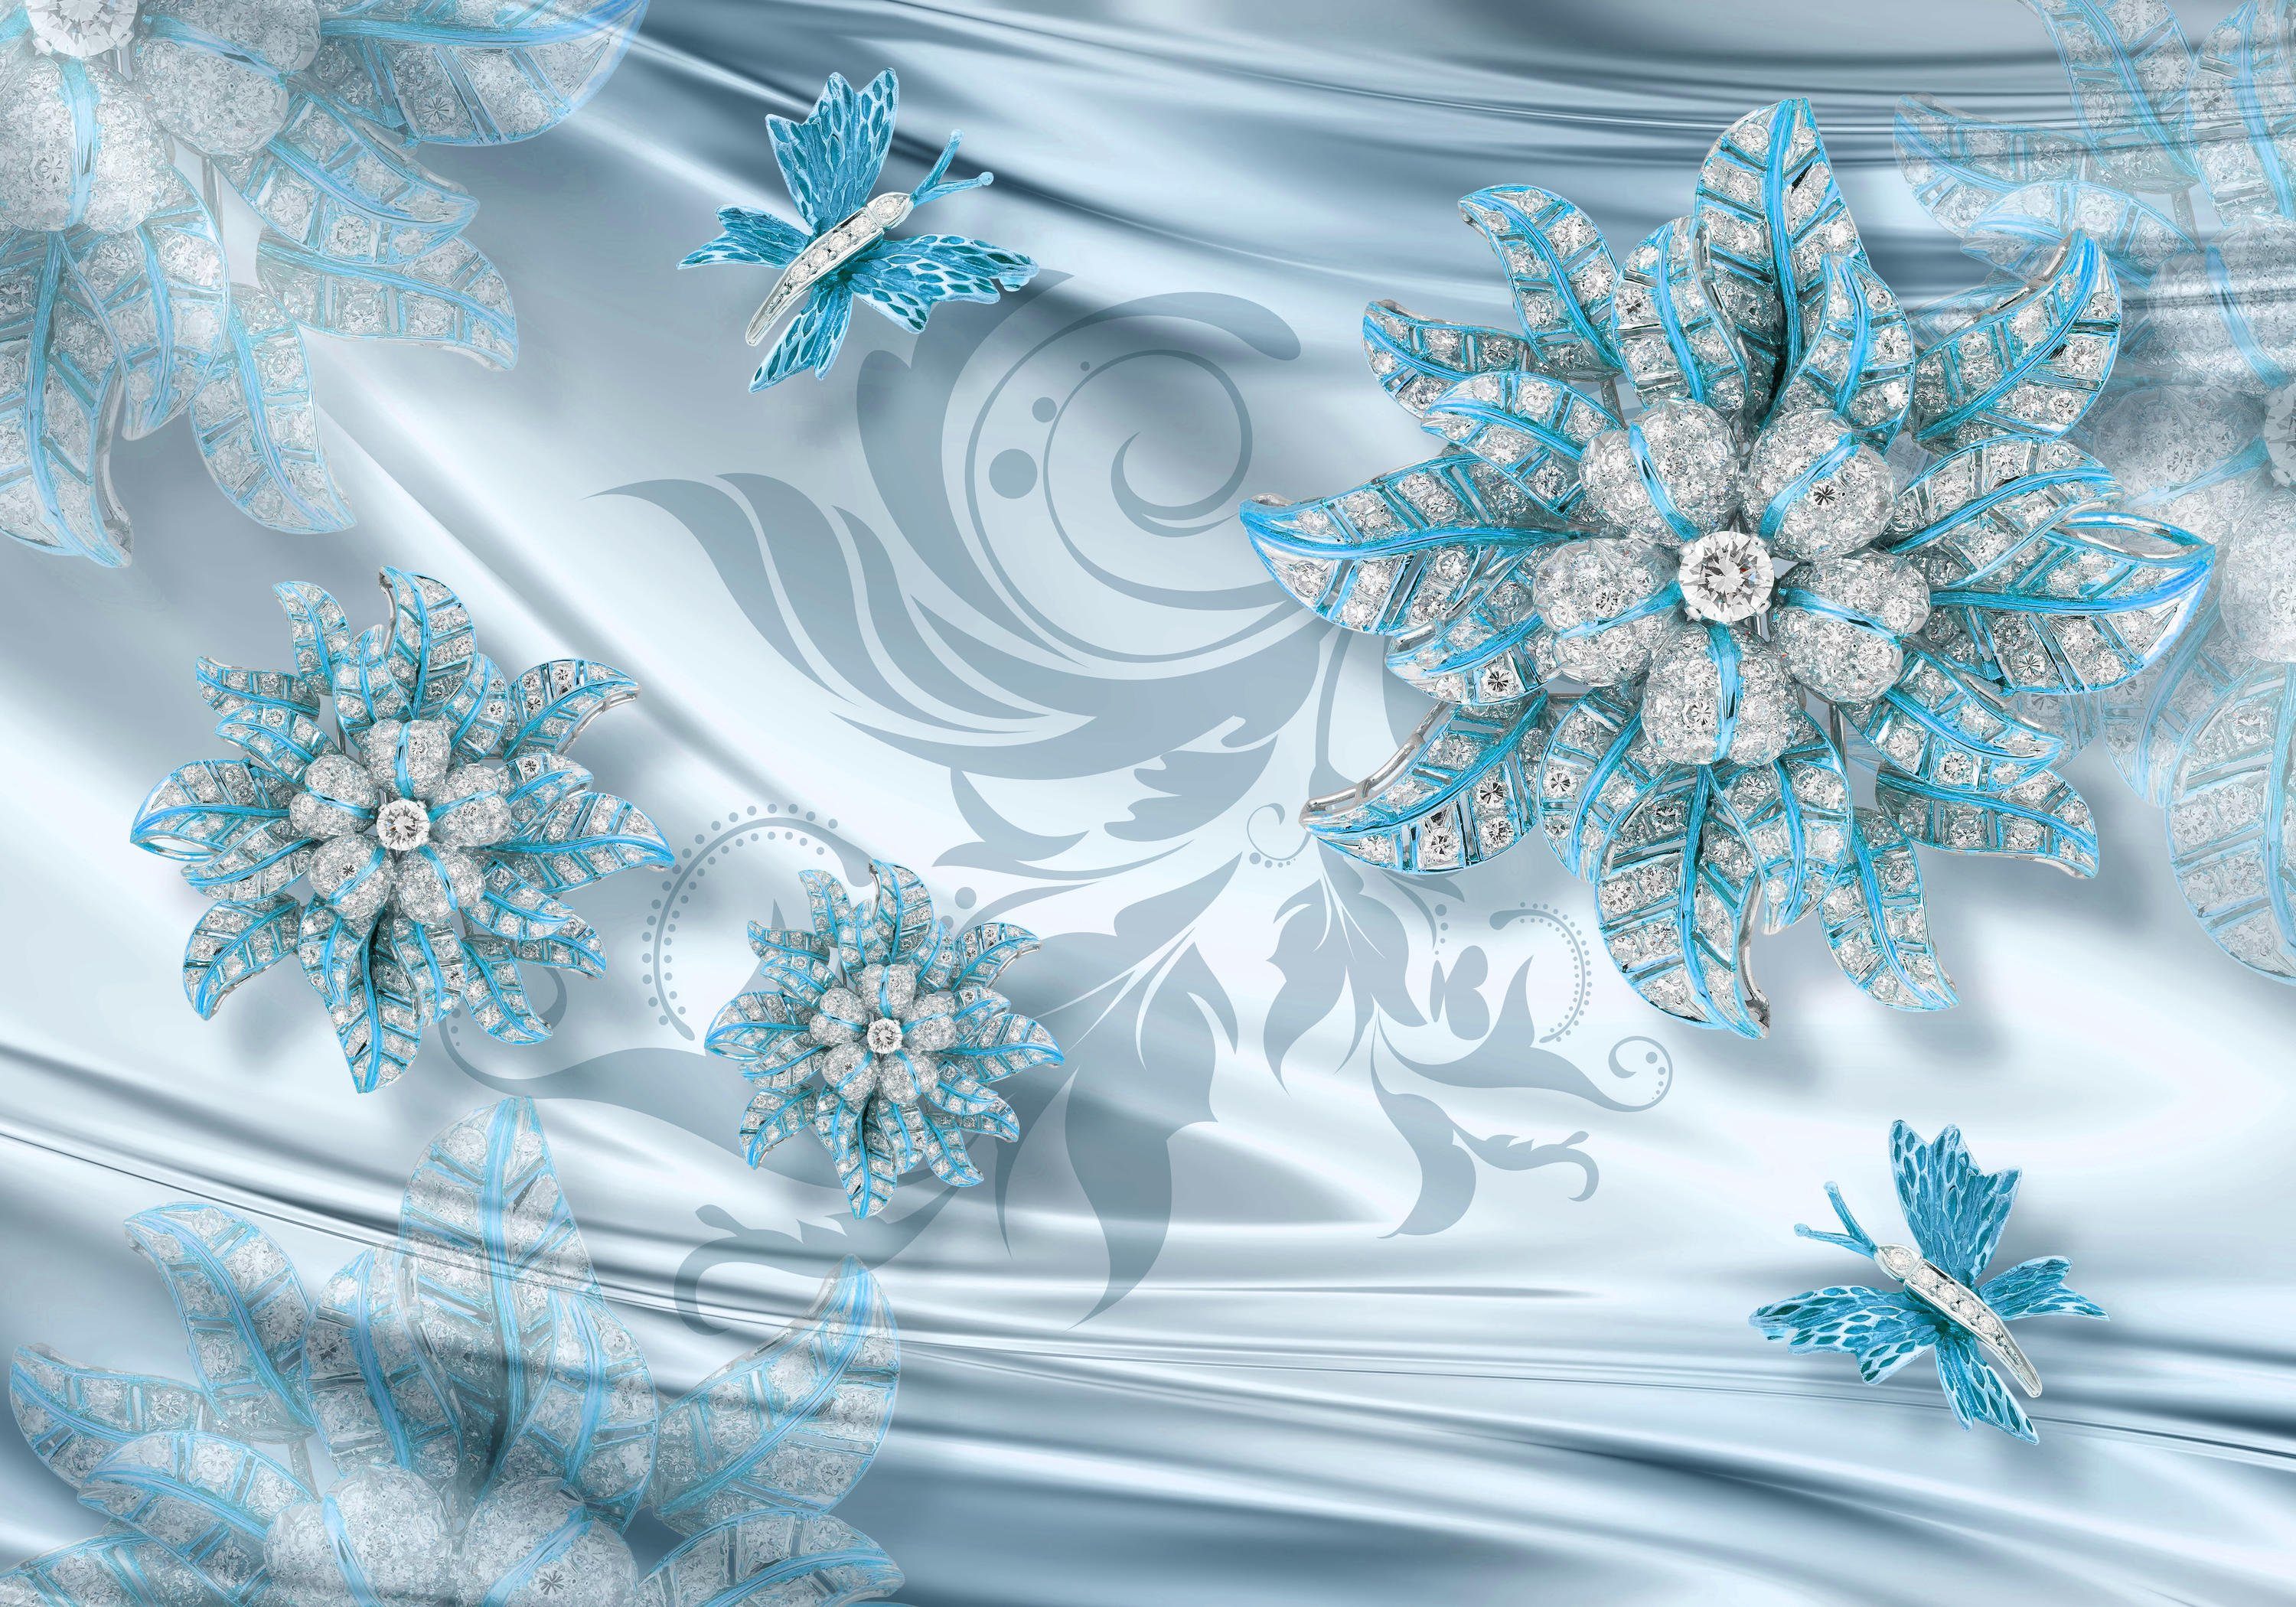 wandmotiv24 Fototapete Abstrakt hell blau Blumen diamanten Seid, glatt,  Wandtapete, Motivtapete, matt, Vliestapete, selbstklebend